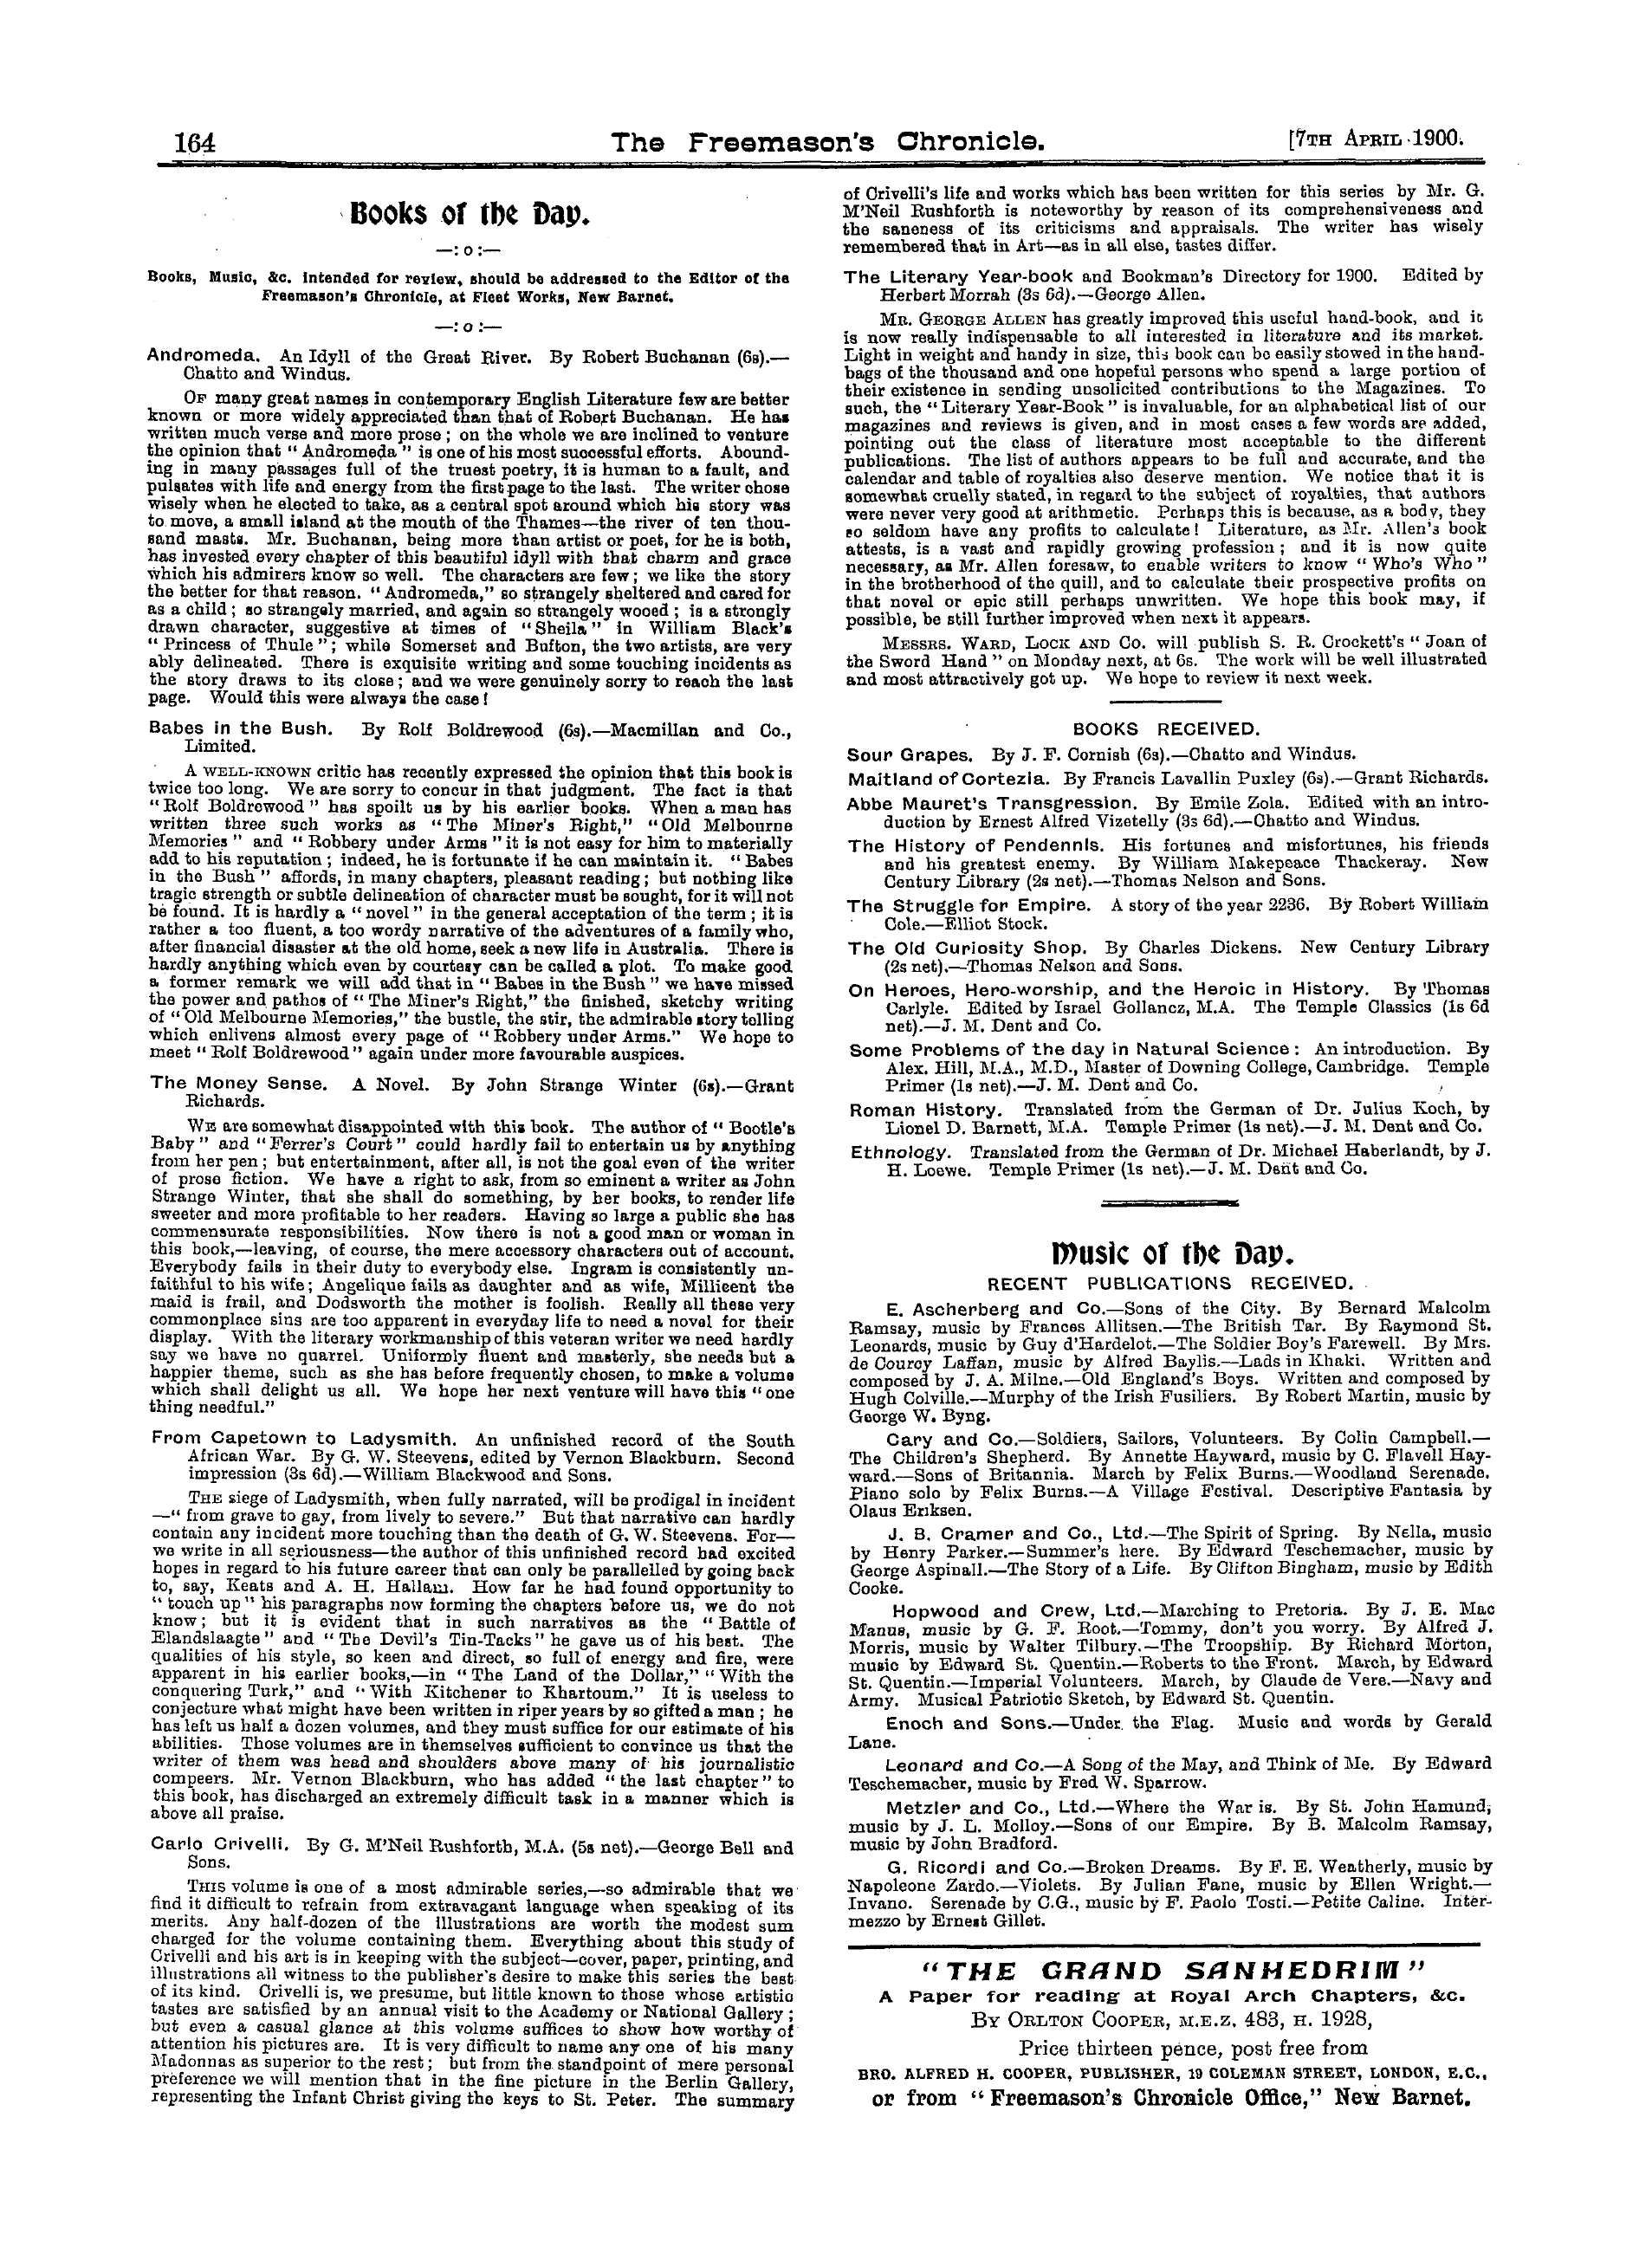 The Freemason's Chronicle: 1900-04-07: 8